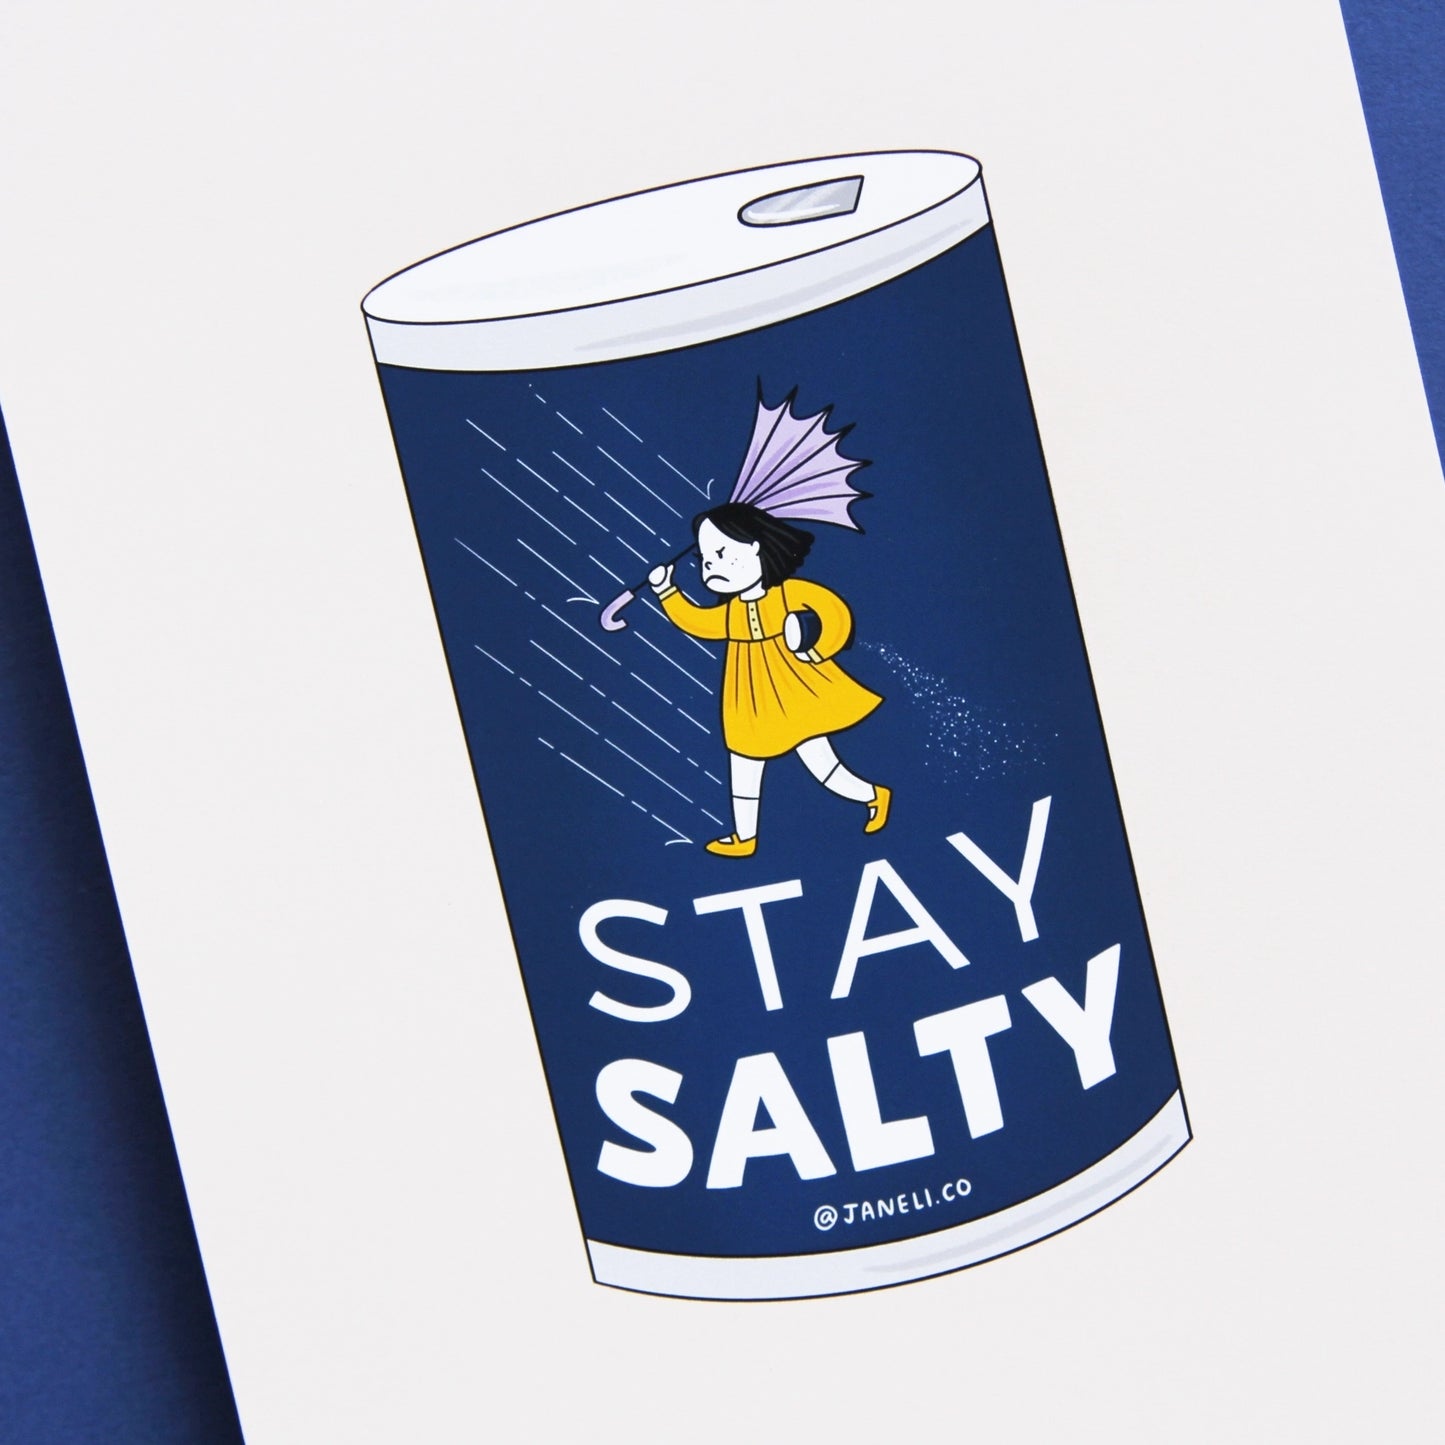 Stay Salty 8" x 10" Print